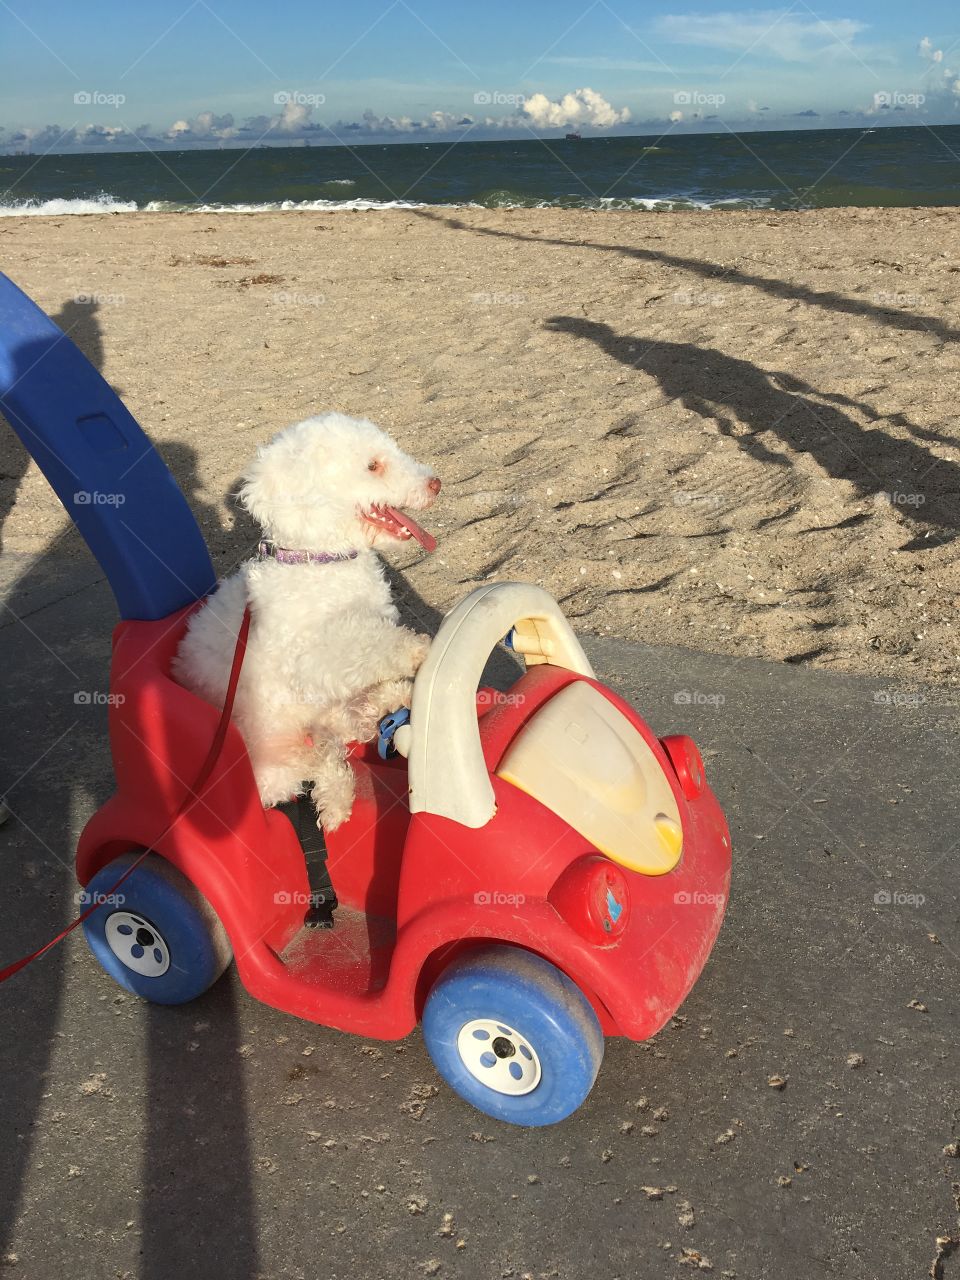 Beach, Child, Vehicle, Toy, Fun